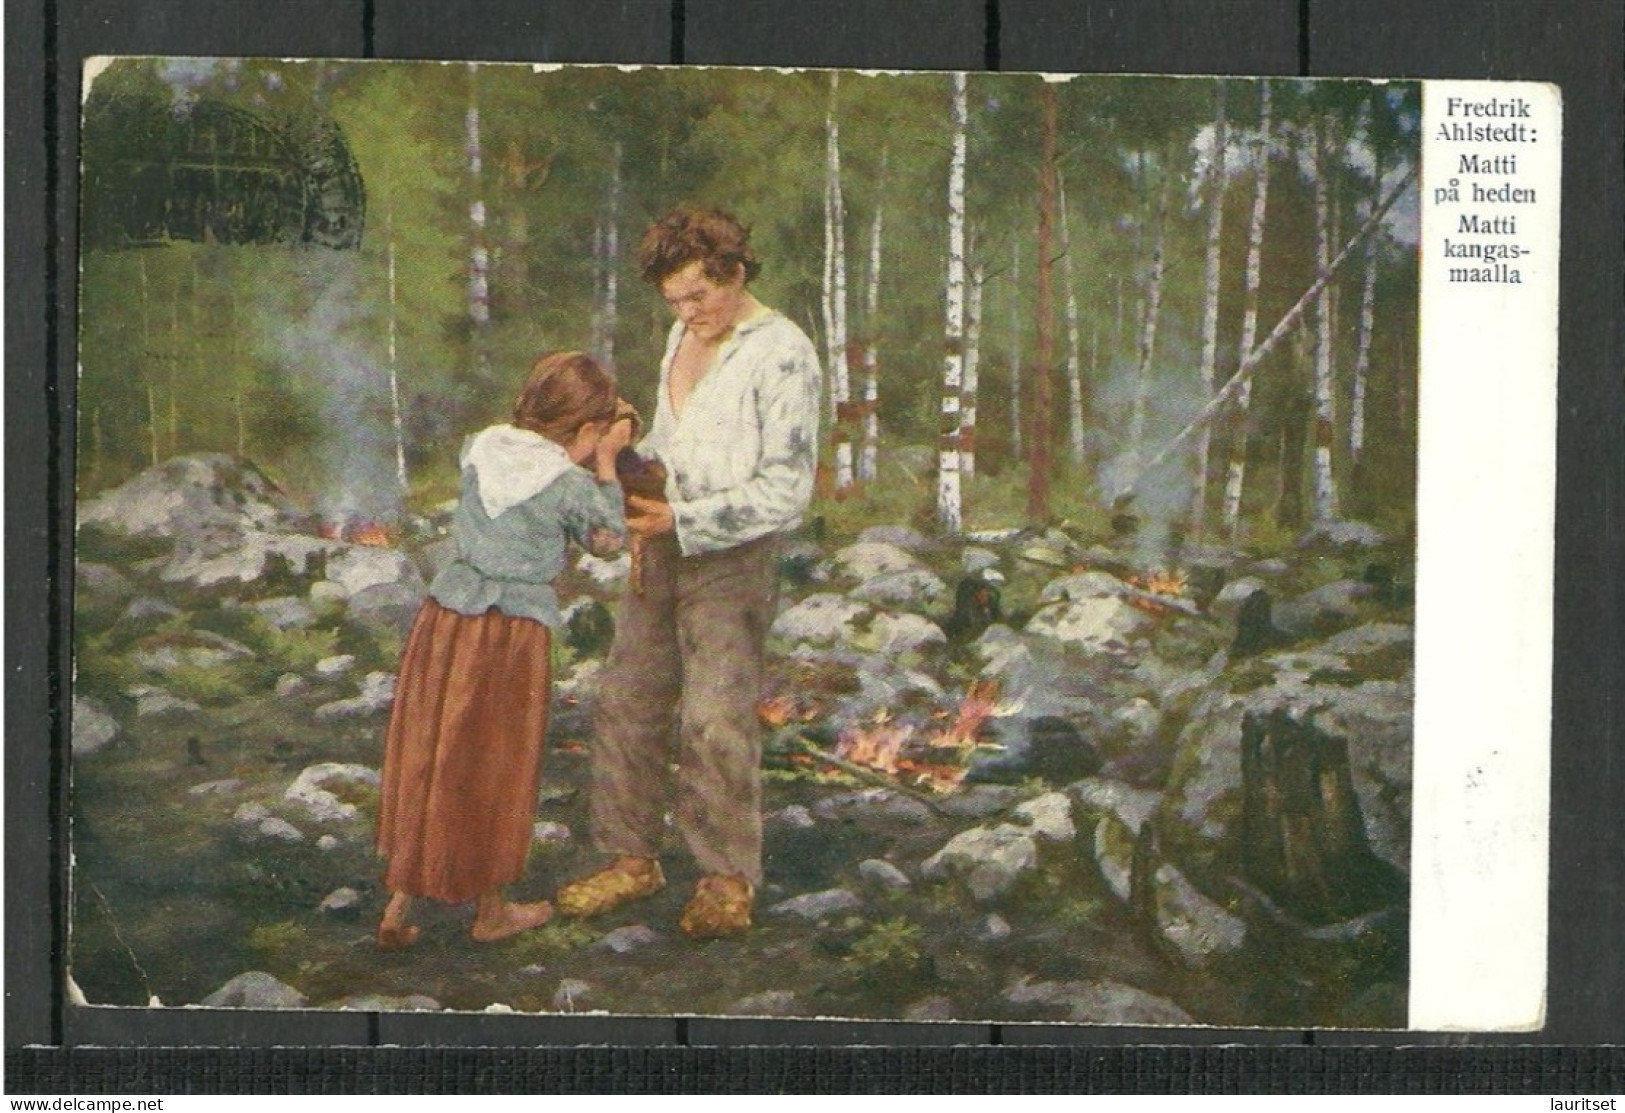 FINLAND O 1912 Post Card Art Kunst Fredrik Ahlstedt: Matti Kangasmaalla, Used - Finland